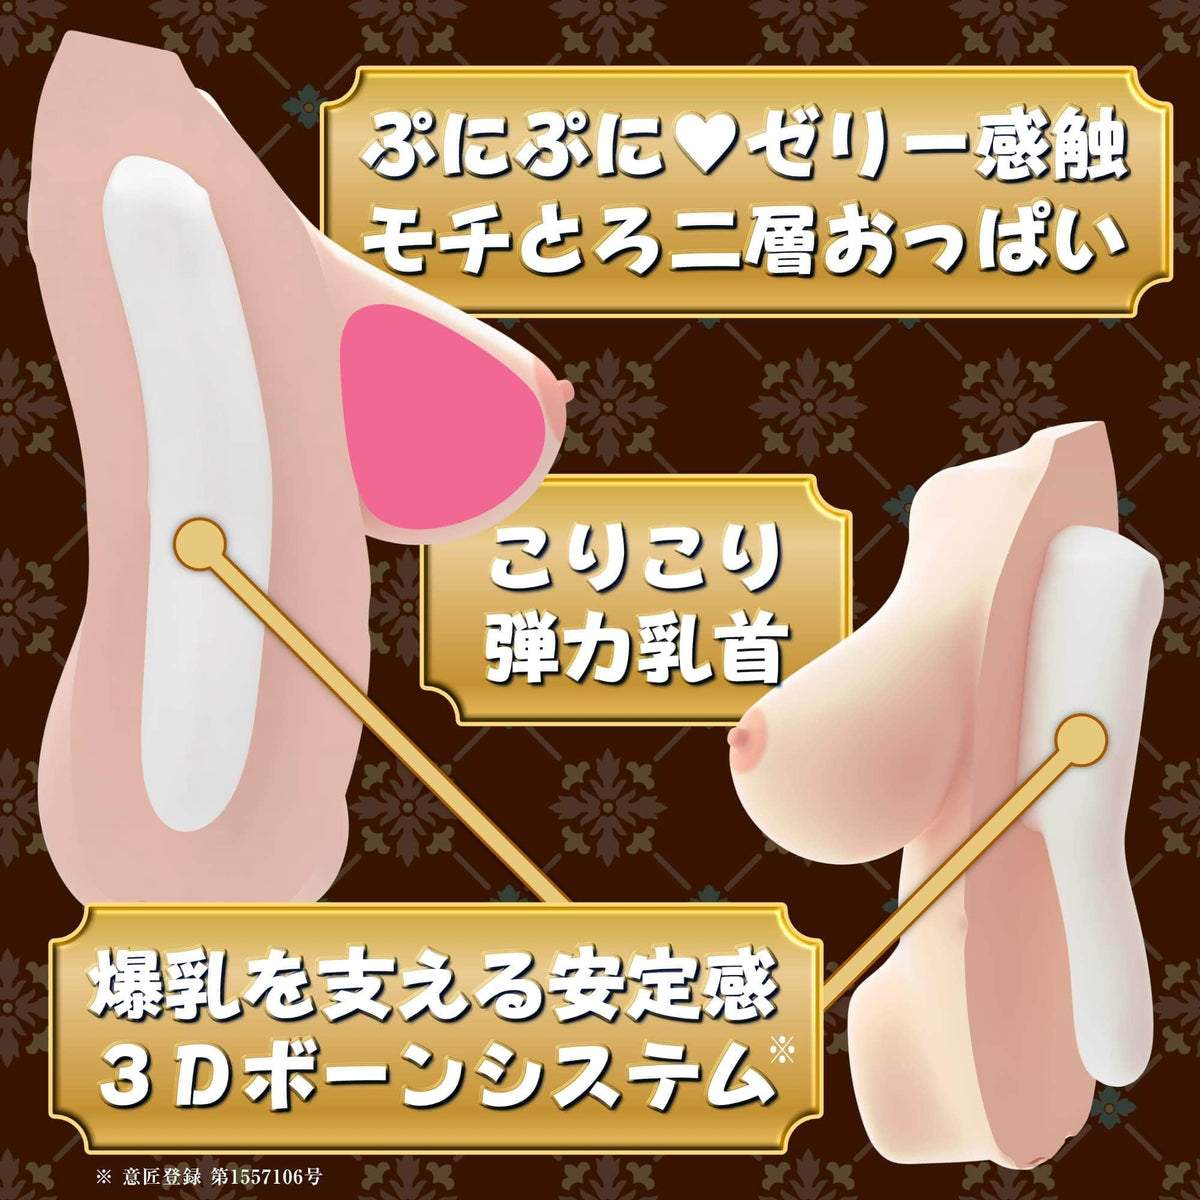 SSI Japan - Real Body + 3D Bone System Super Pai Kitaoji Kanon Doll 10kg (Beige) SSI1037 CherryAffairs